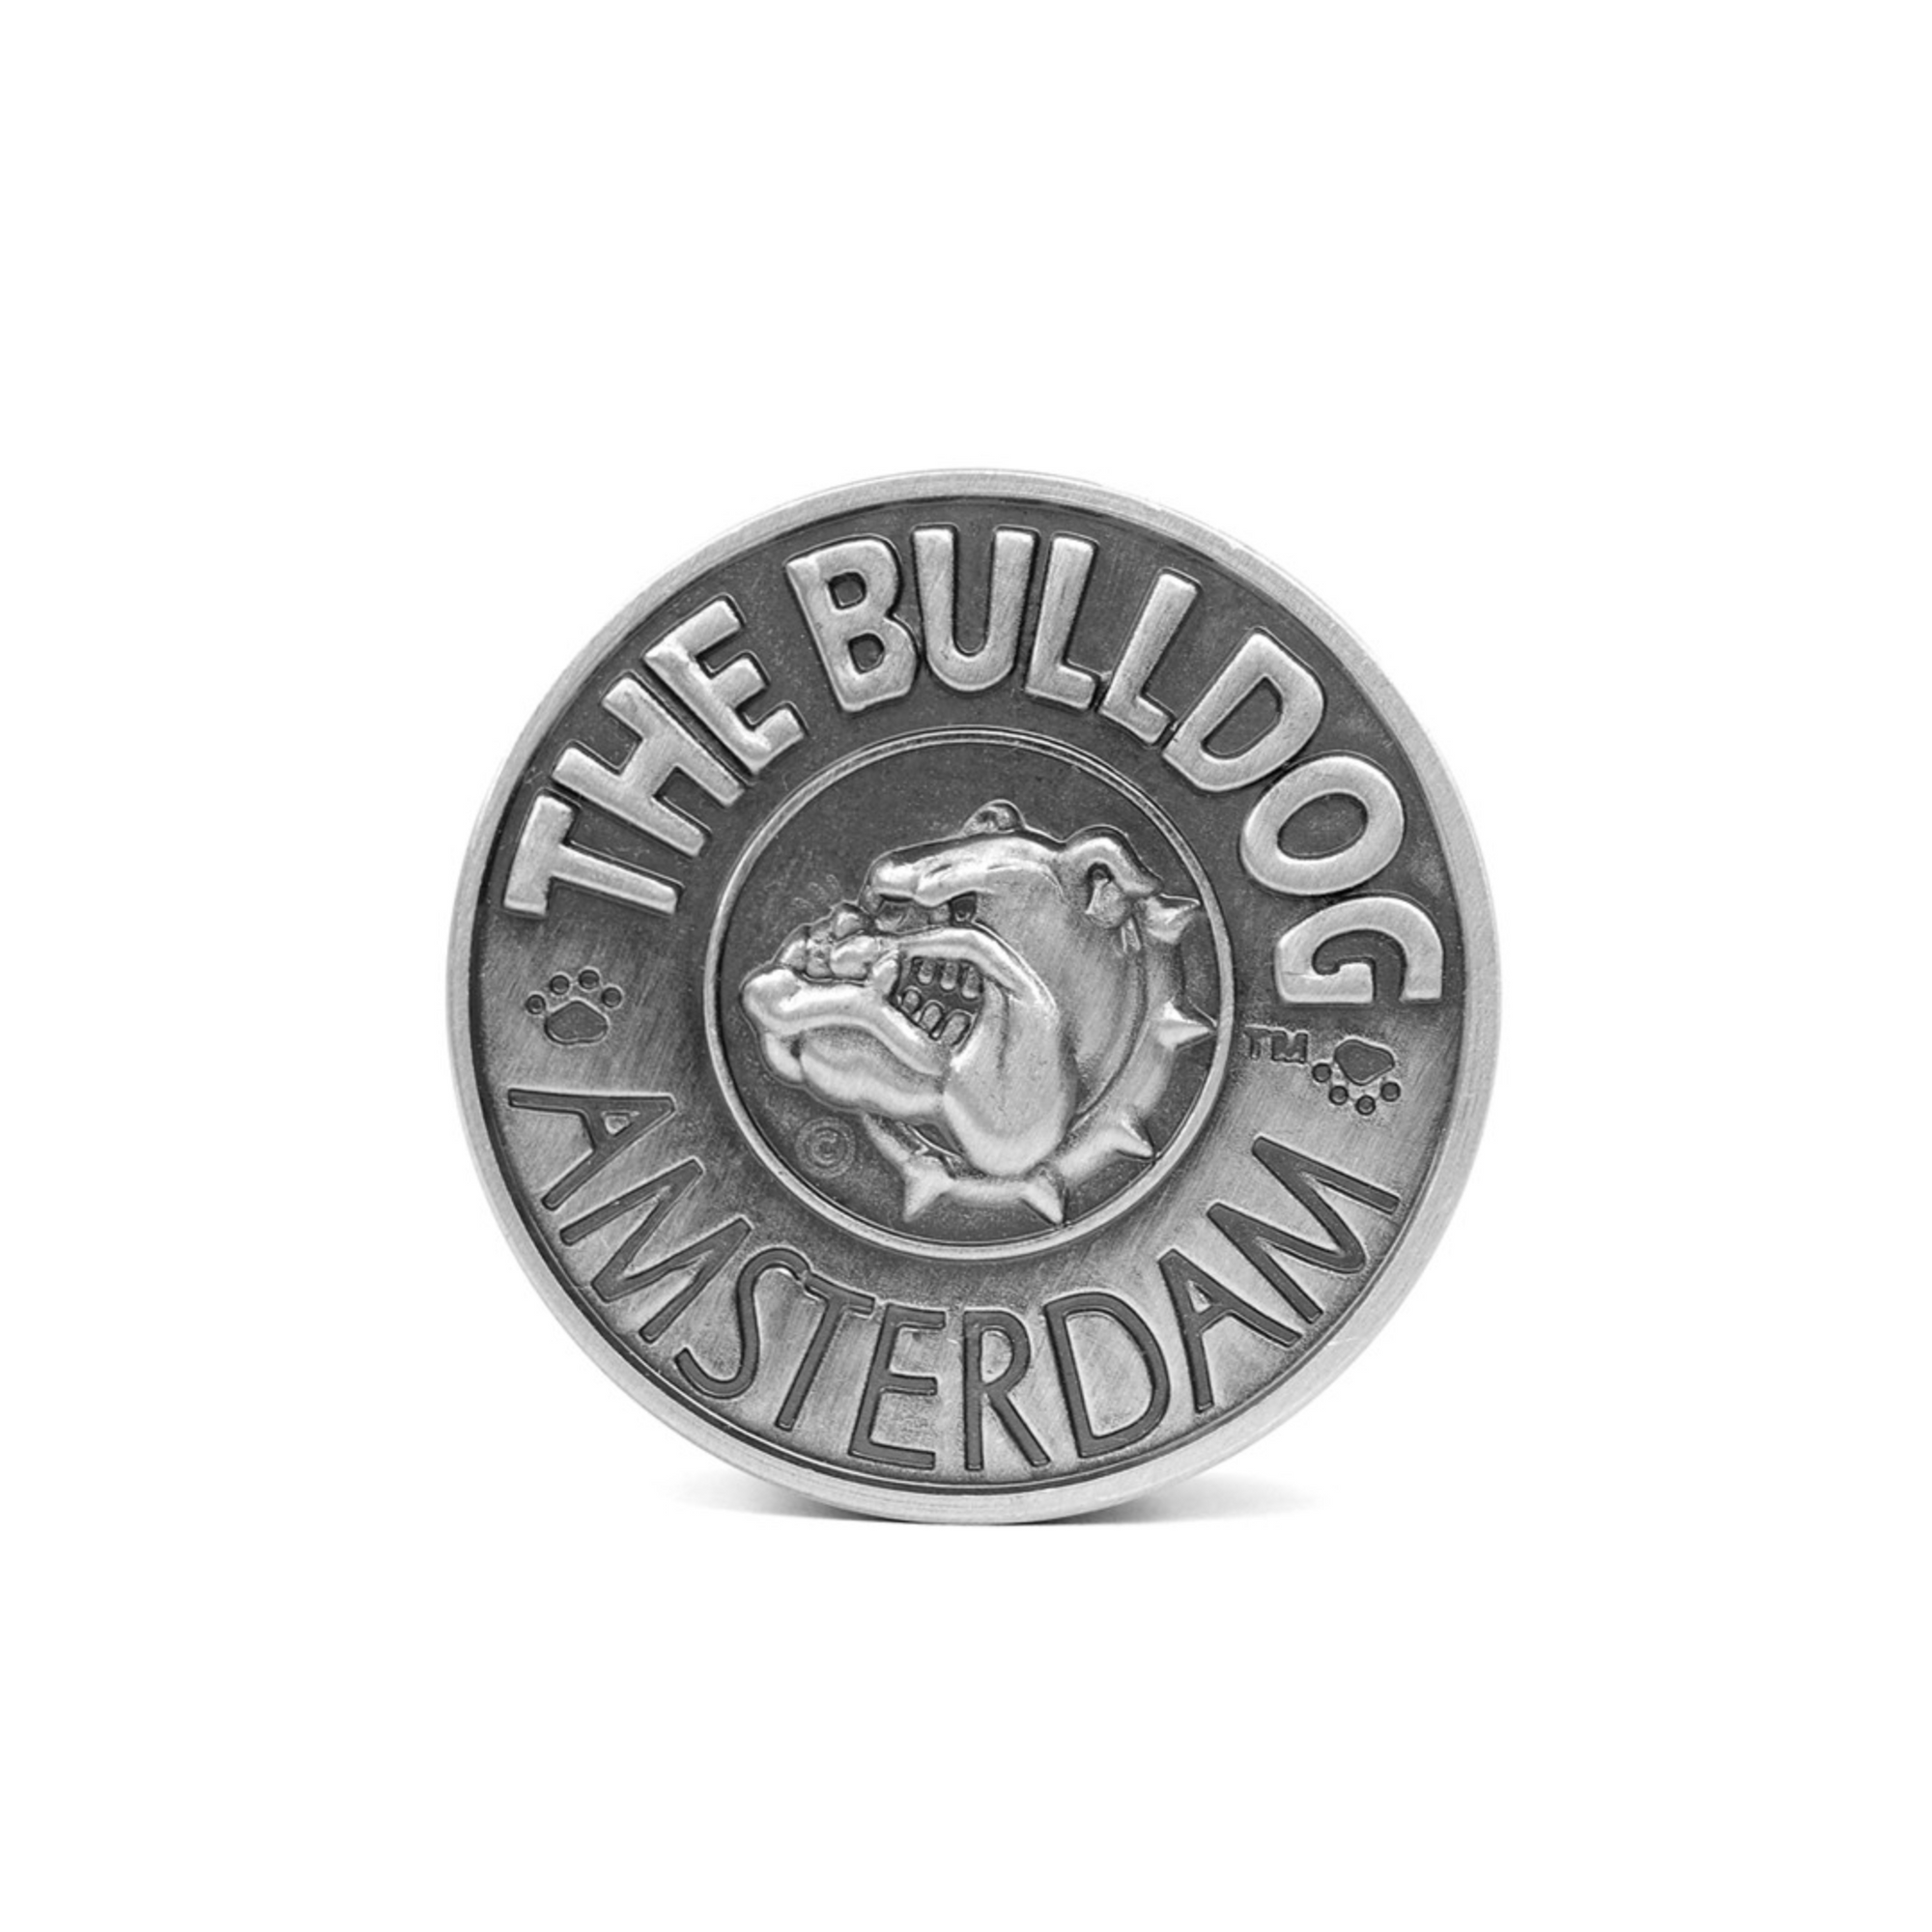 Metallic Bulldog Grinder (2 parts)